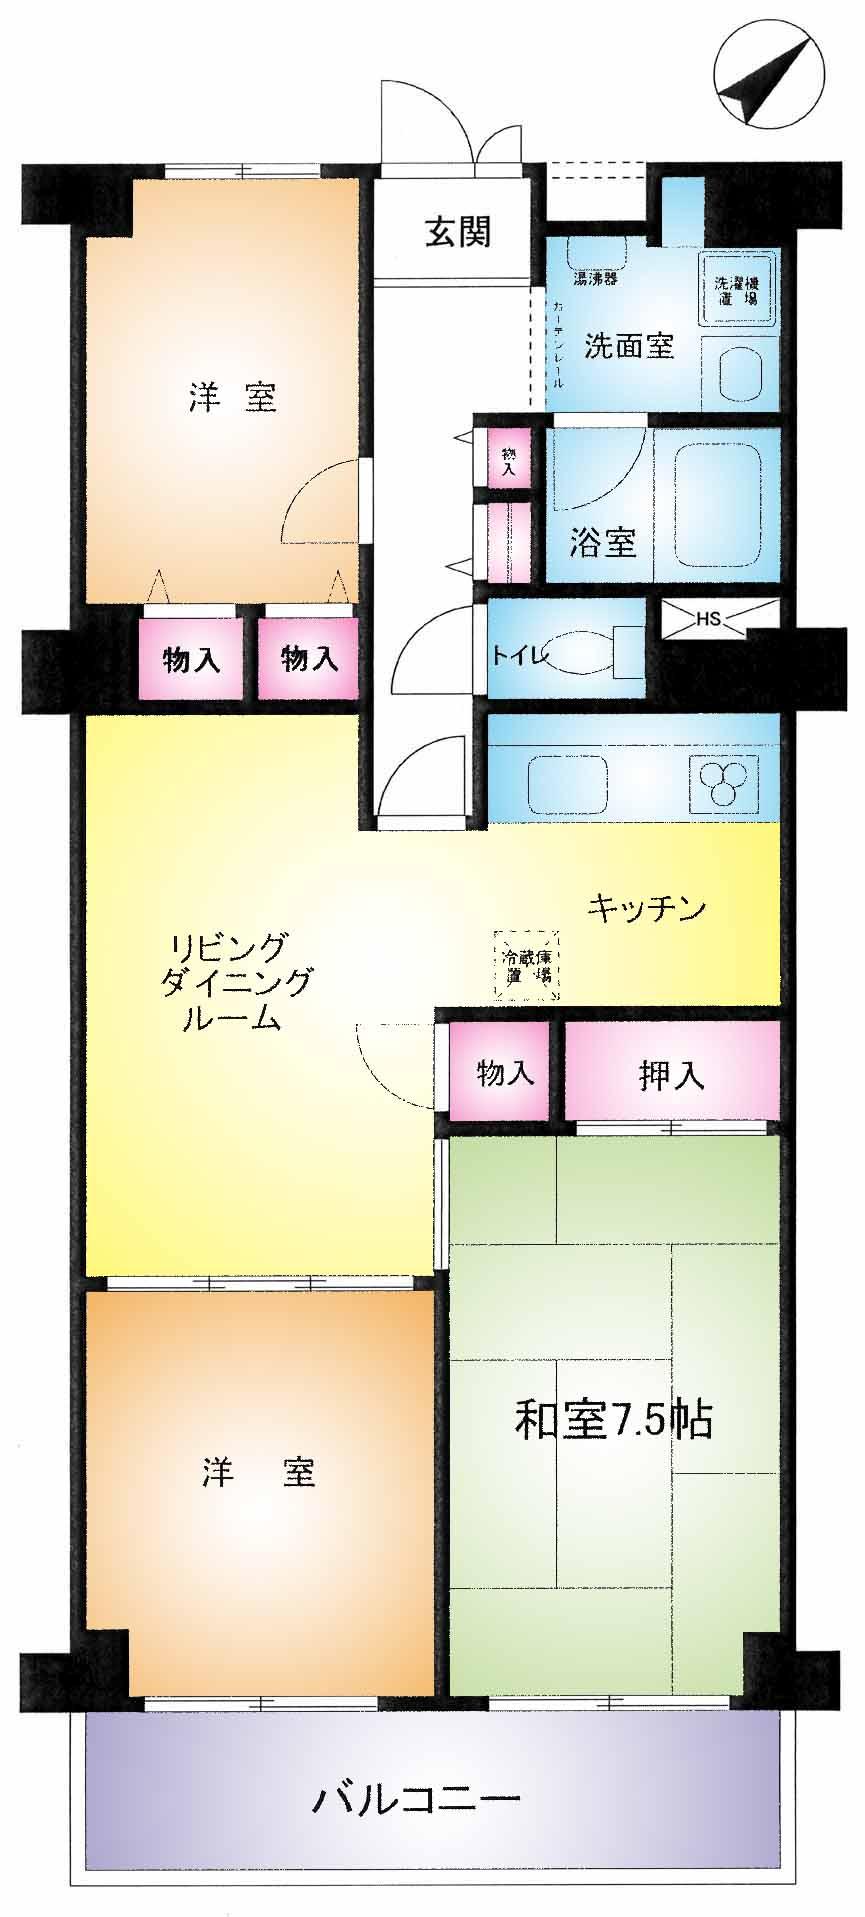 Floor plan. 3LDK, Price 10.5 million yen, Footprint 67.2 sq m , Balcony area 7.84 sq m floor plan